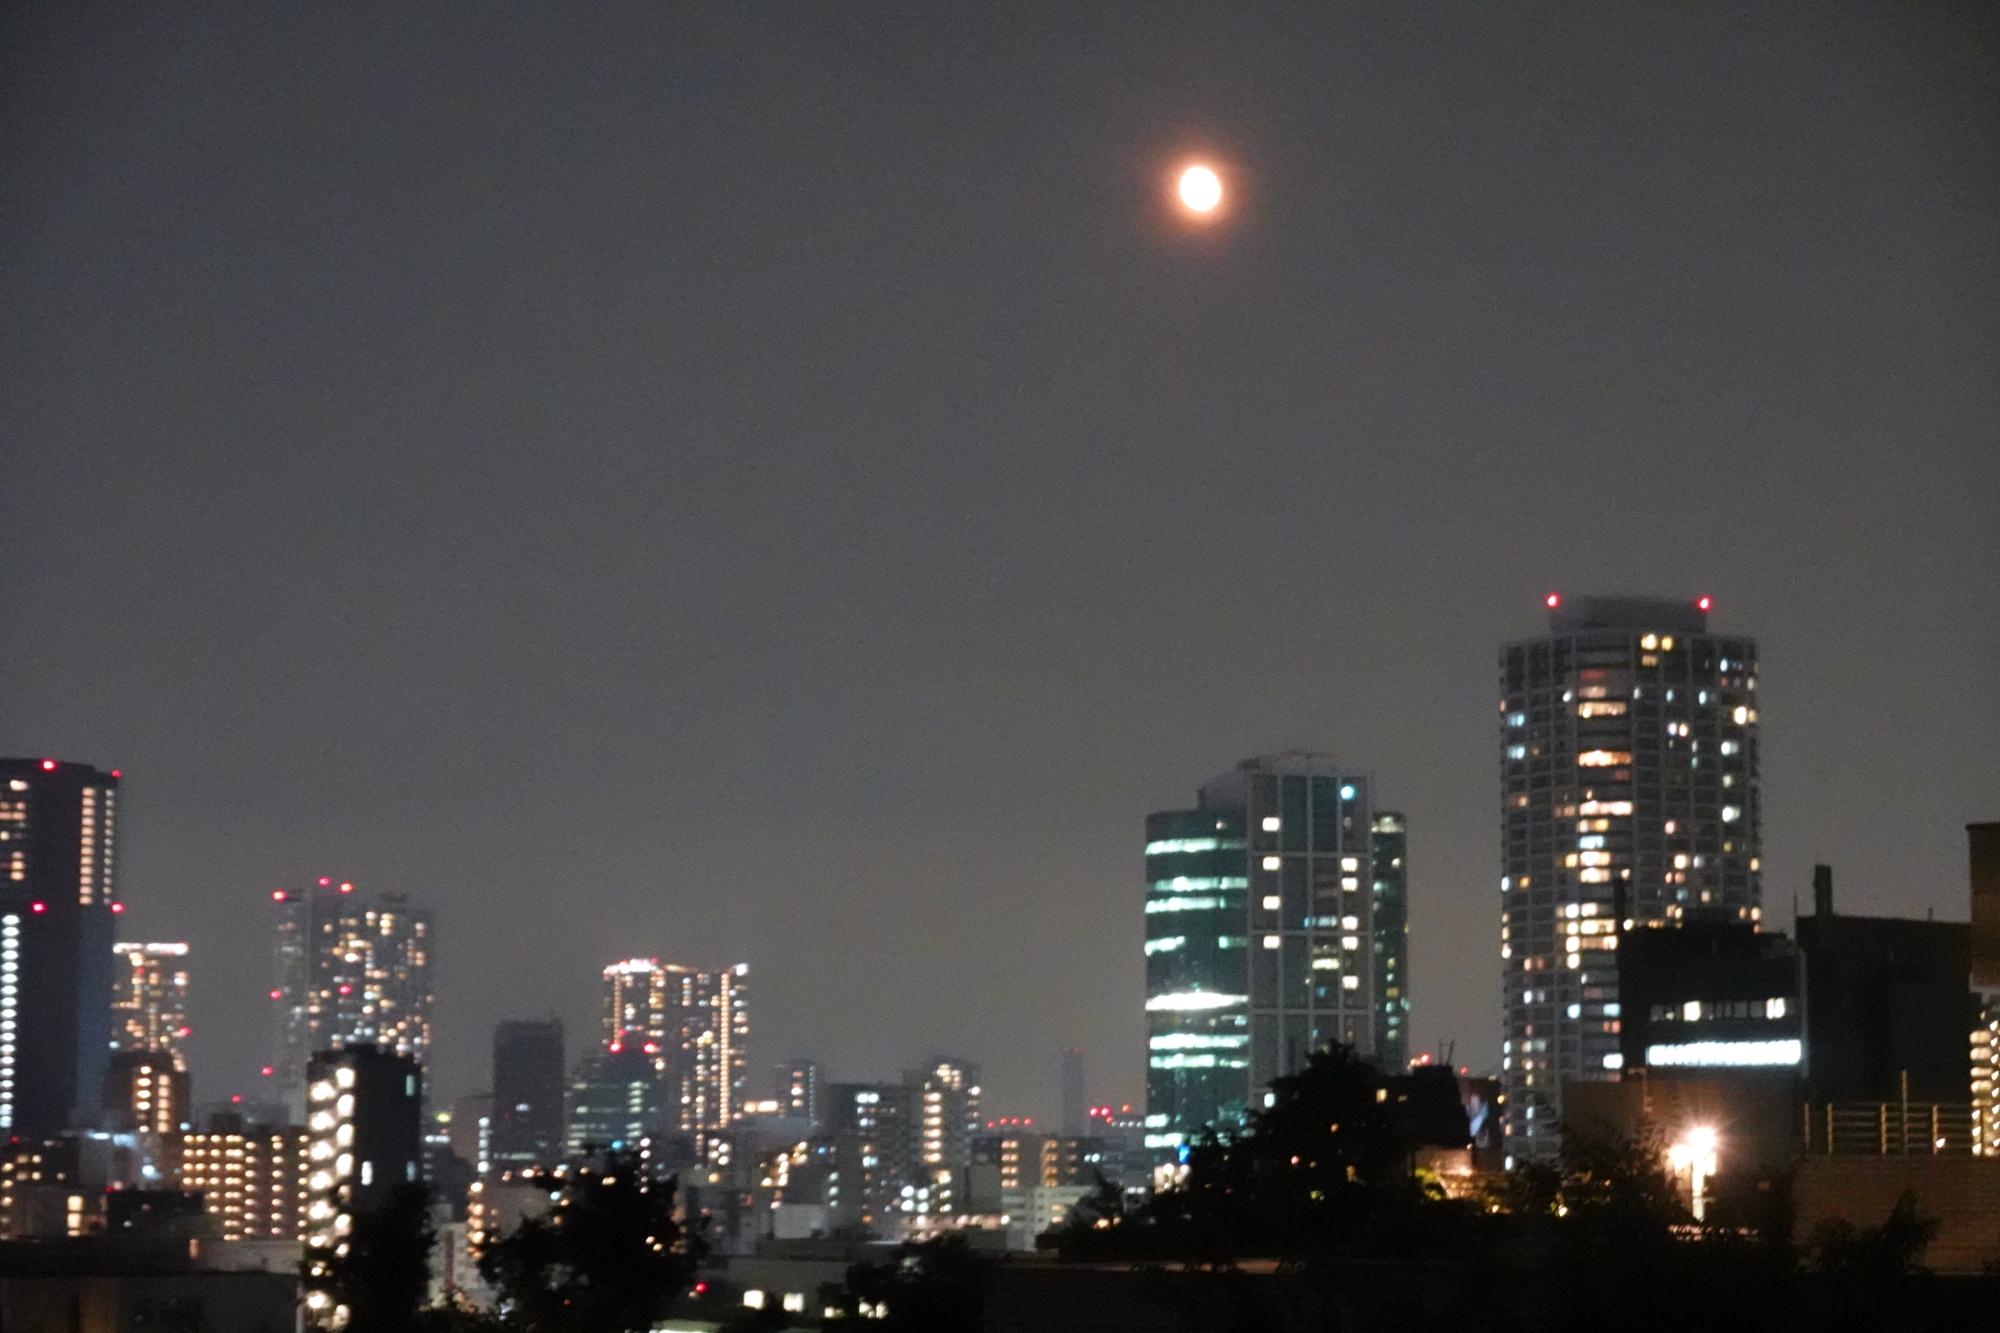 Tokyo (2019) - Full Moon